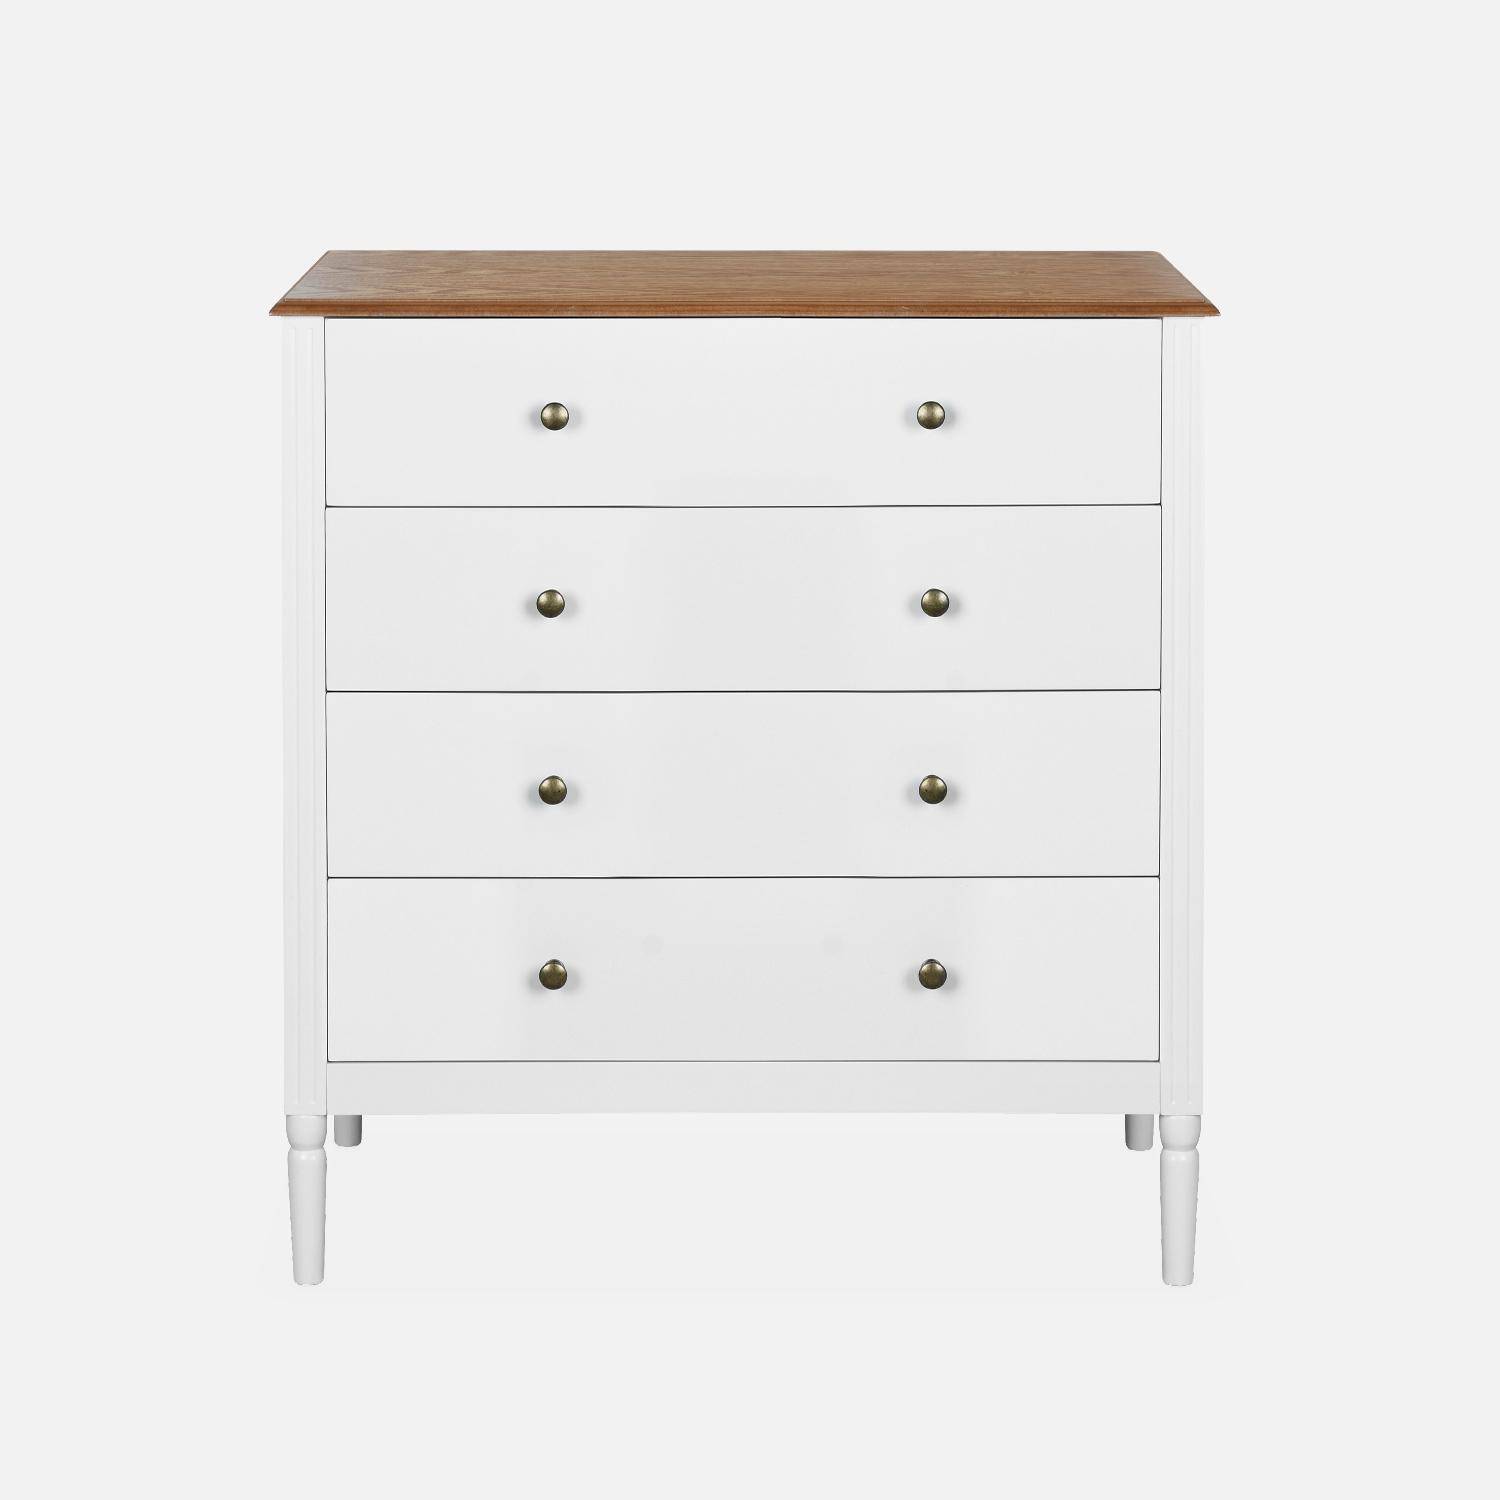 4-drawer chest with pinewood legs, 80x40x85cm, Celeste, White,sweeek,Photo4